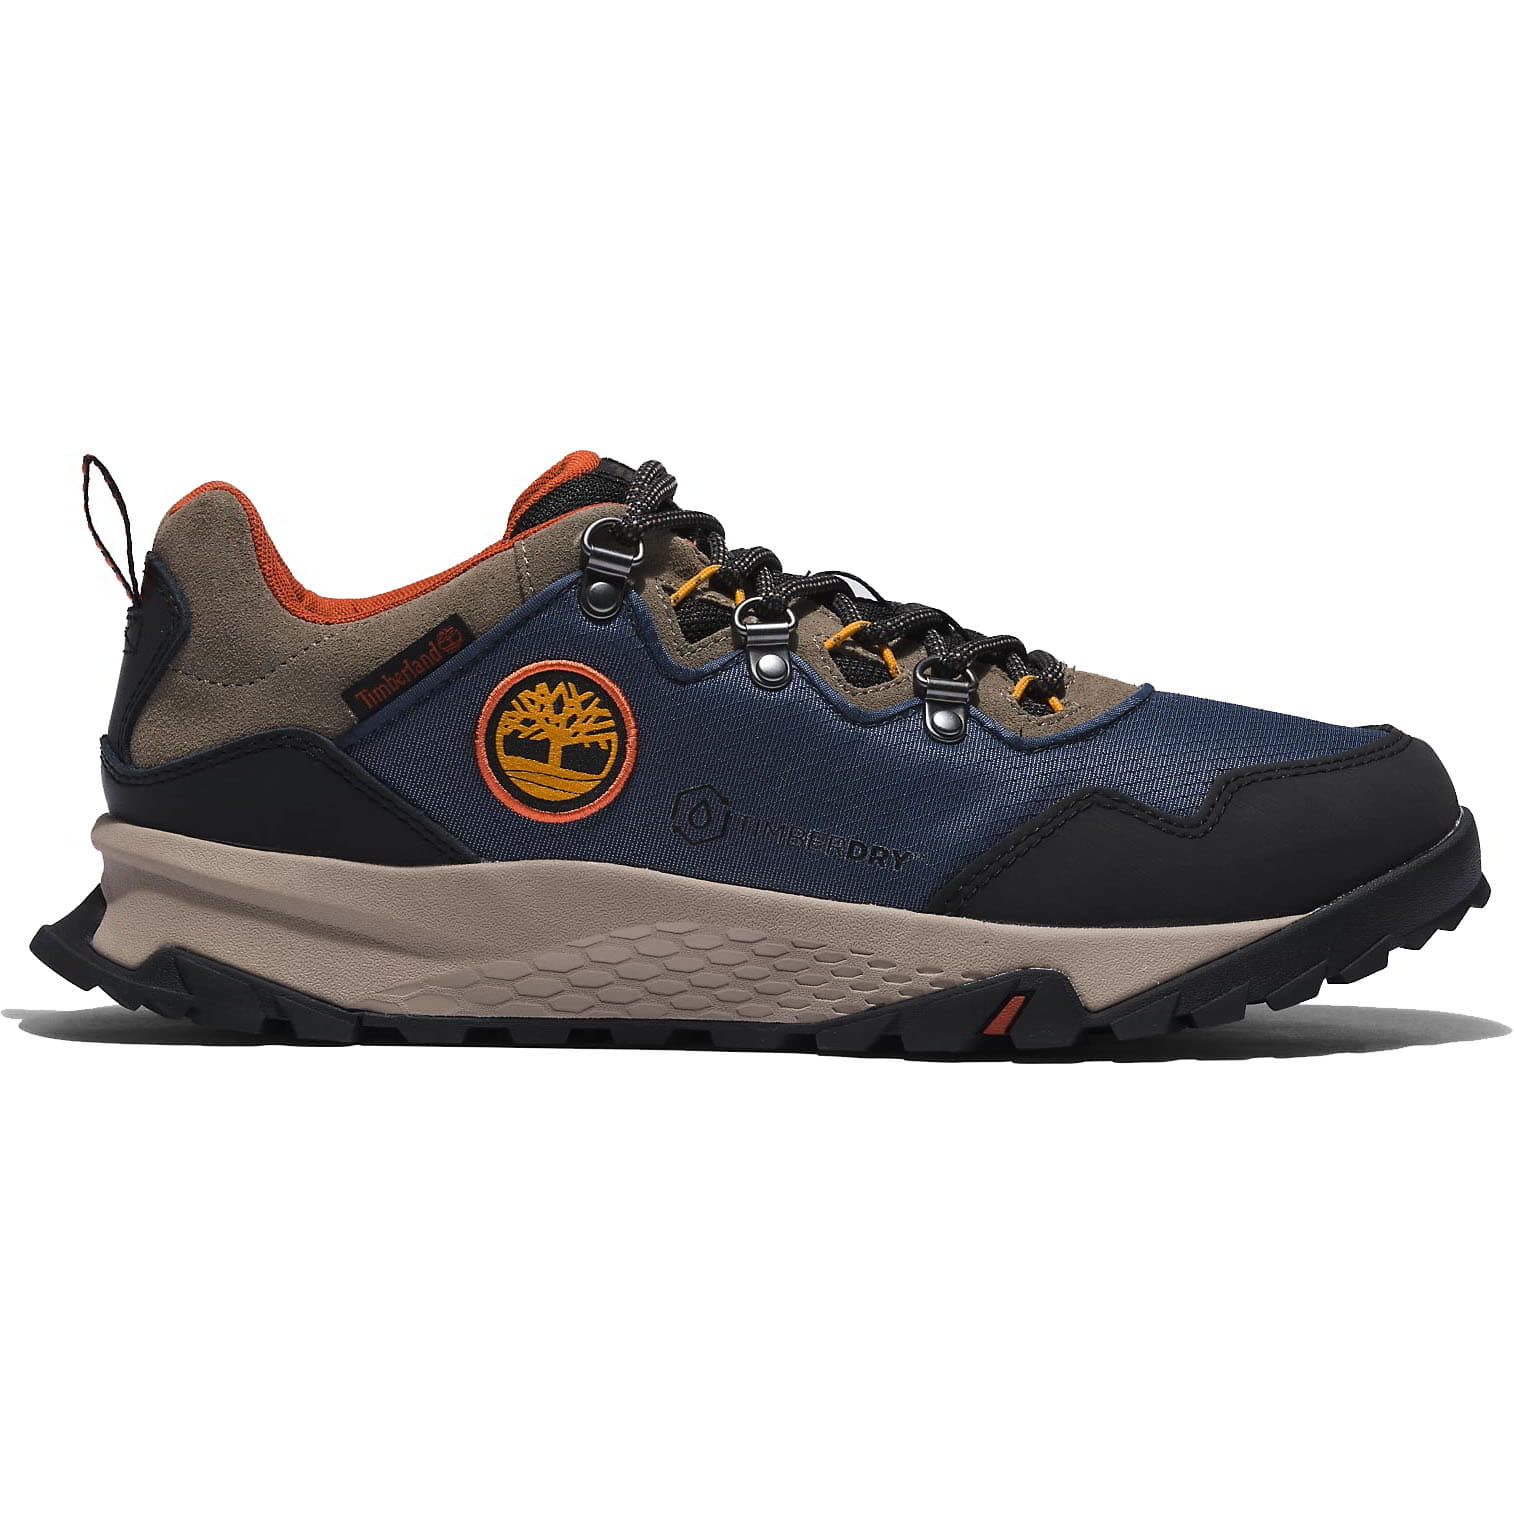 Timberland Mens A2DZZ Lincoln Peak Low Waterproof Walking Hiking Shoes - UK 9 Blue 2951